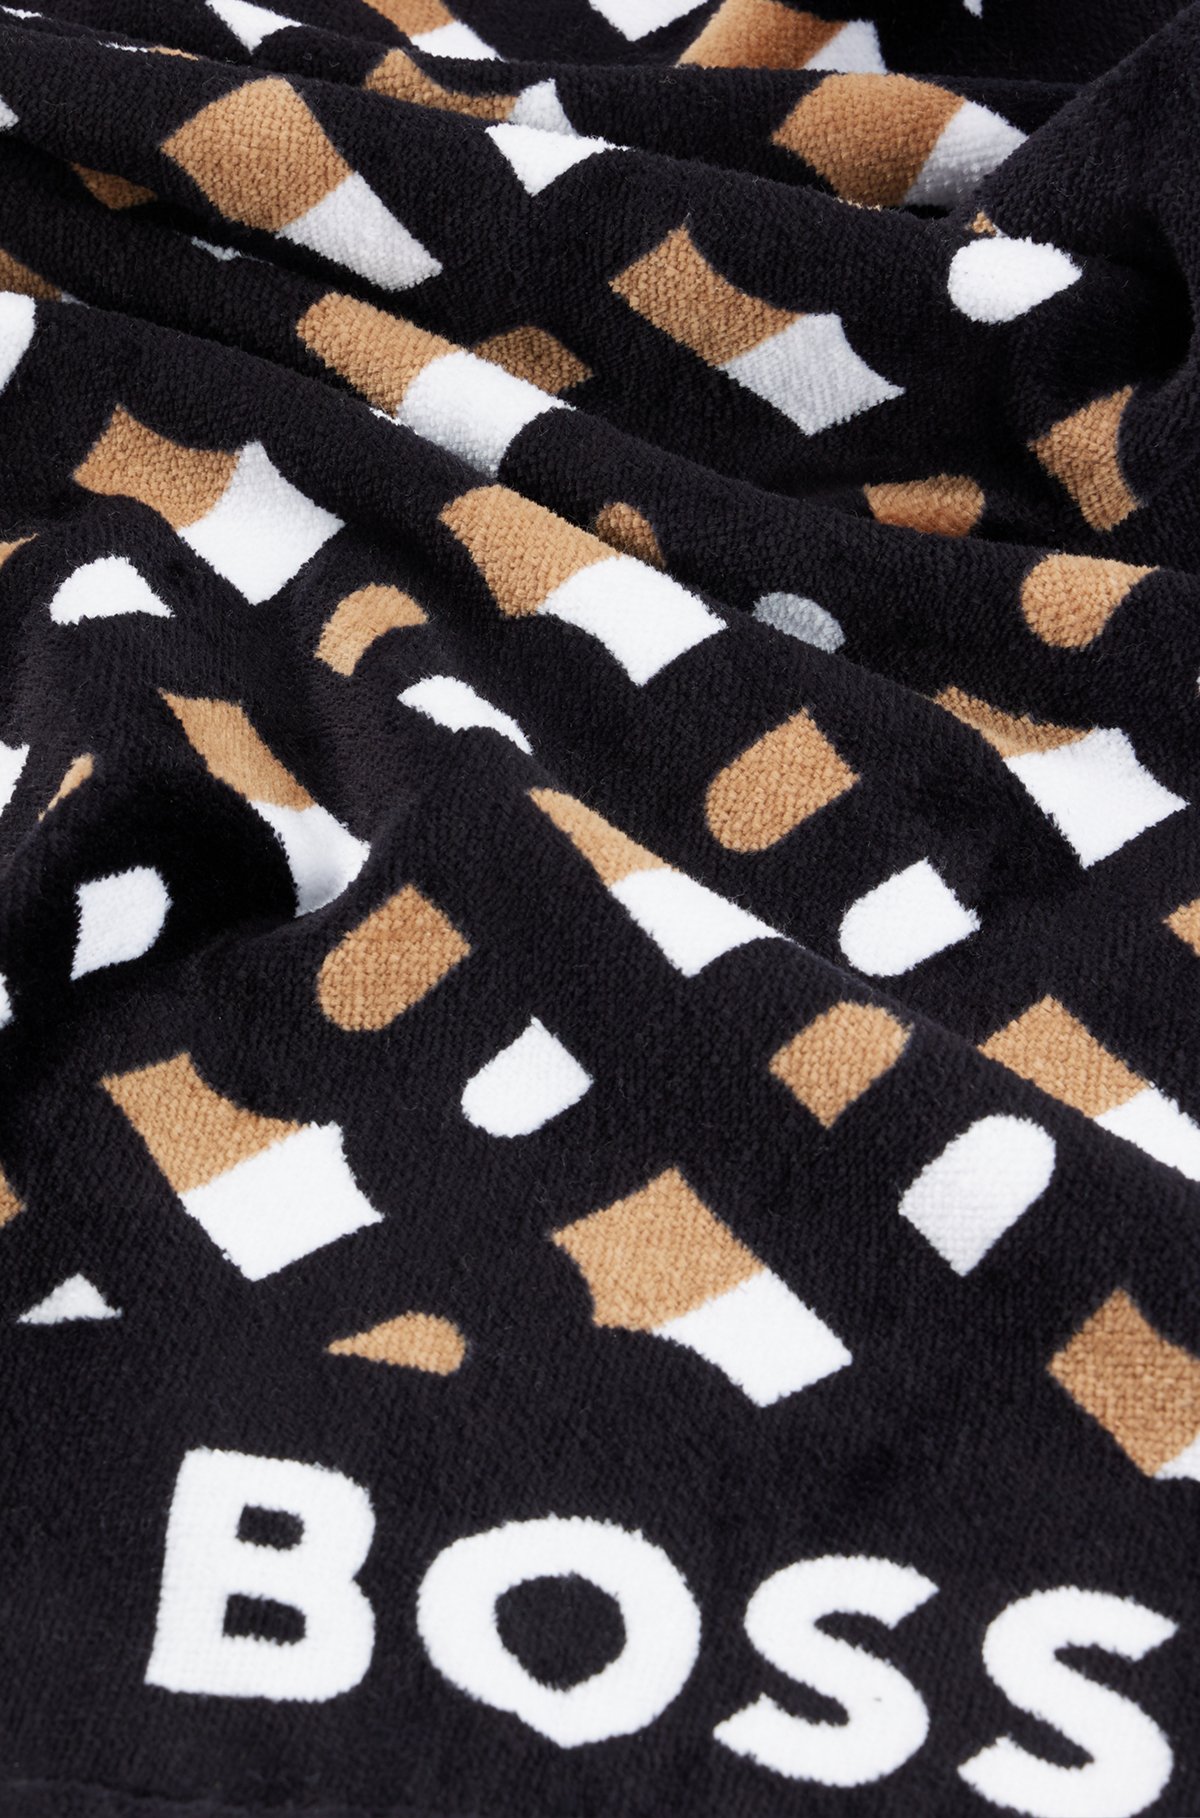 Monogram-print beach towel in cotton velvet, Black